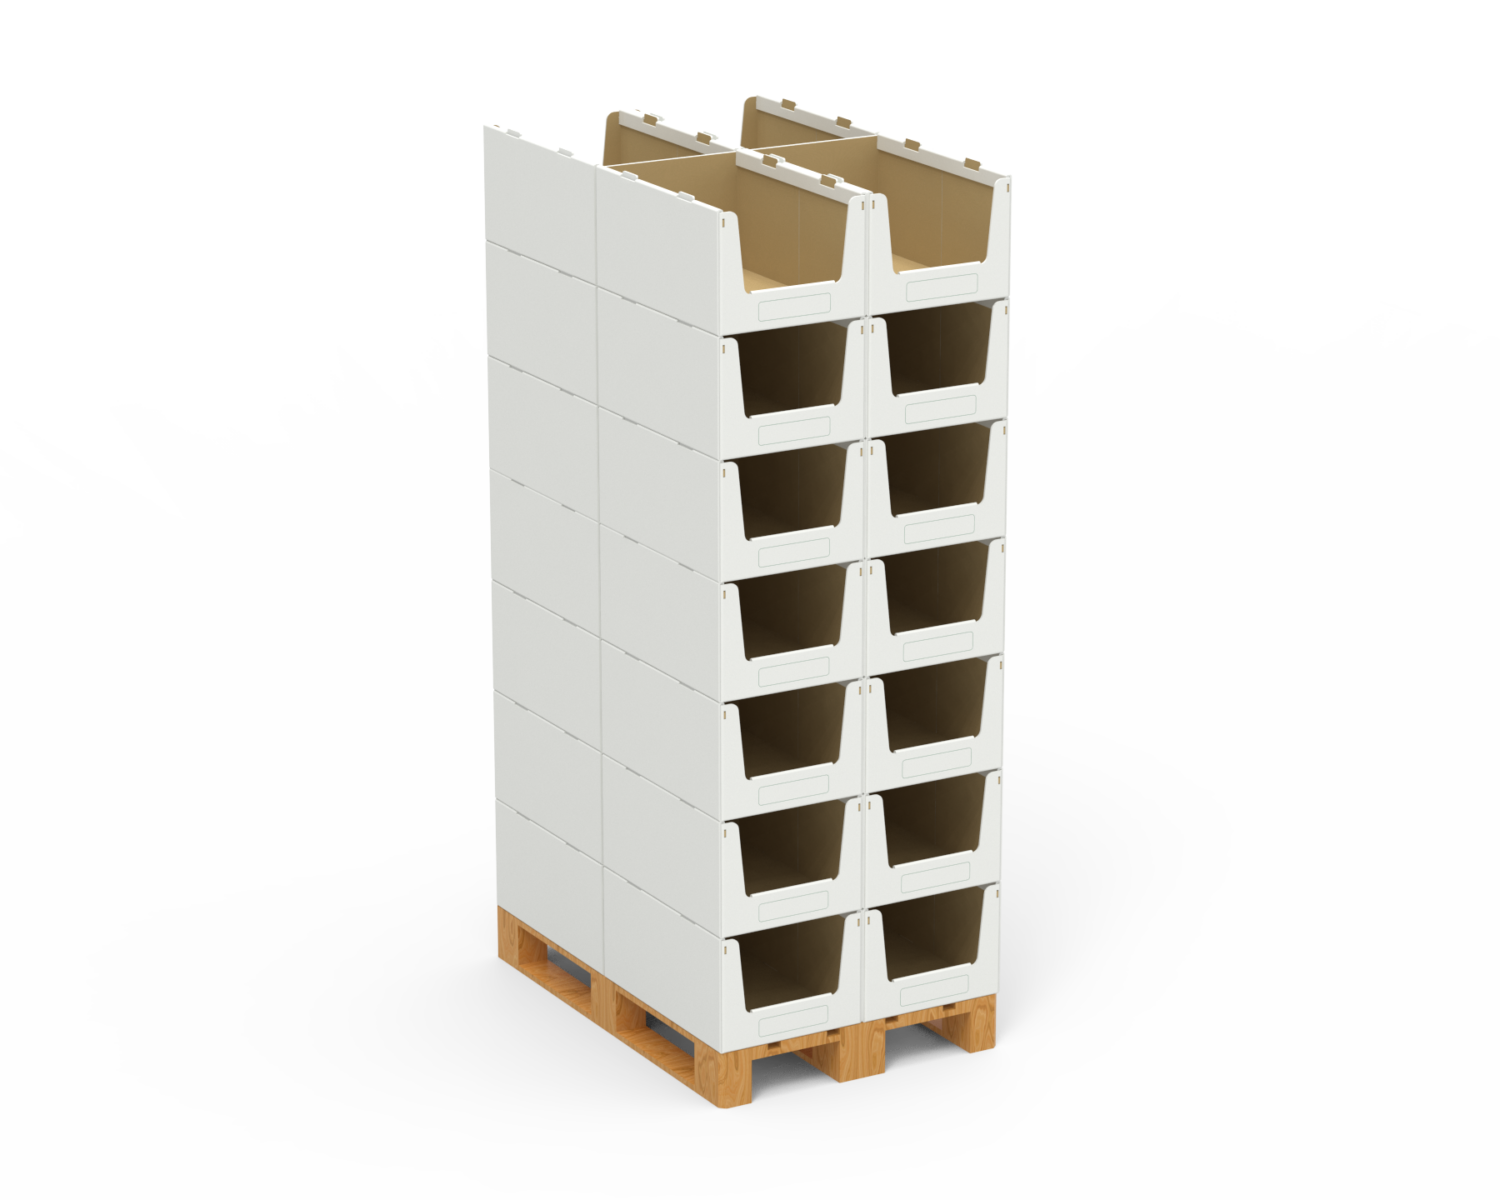 sichtlagerkästen-stapelboxen-euroboxen-regalboxen-lagerbox-lagerkarton-pallette-euro-holz-wellpappe-weiß-braun-stapelbar-gestapelt-aufgebaut-fsc